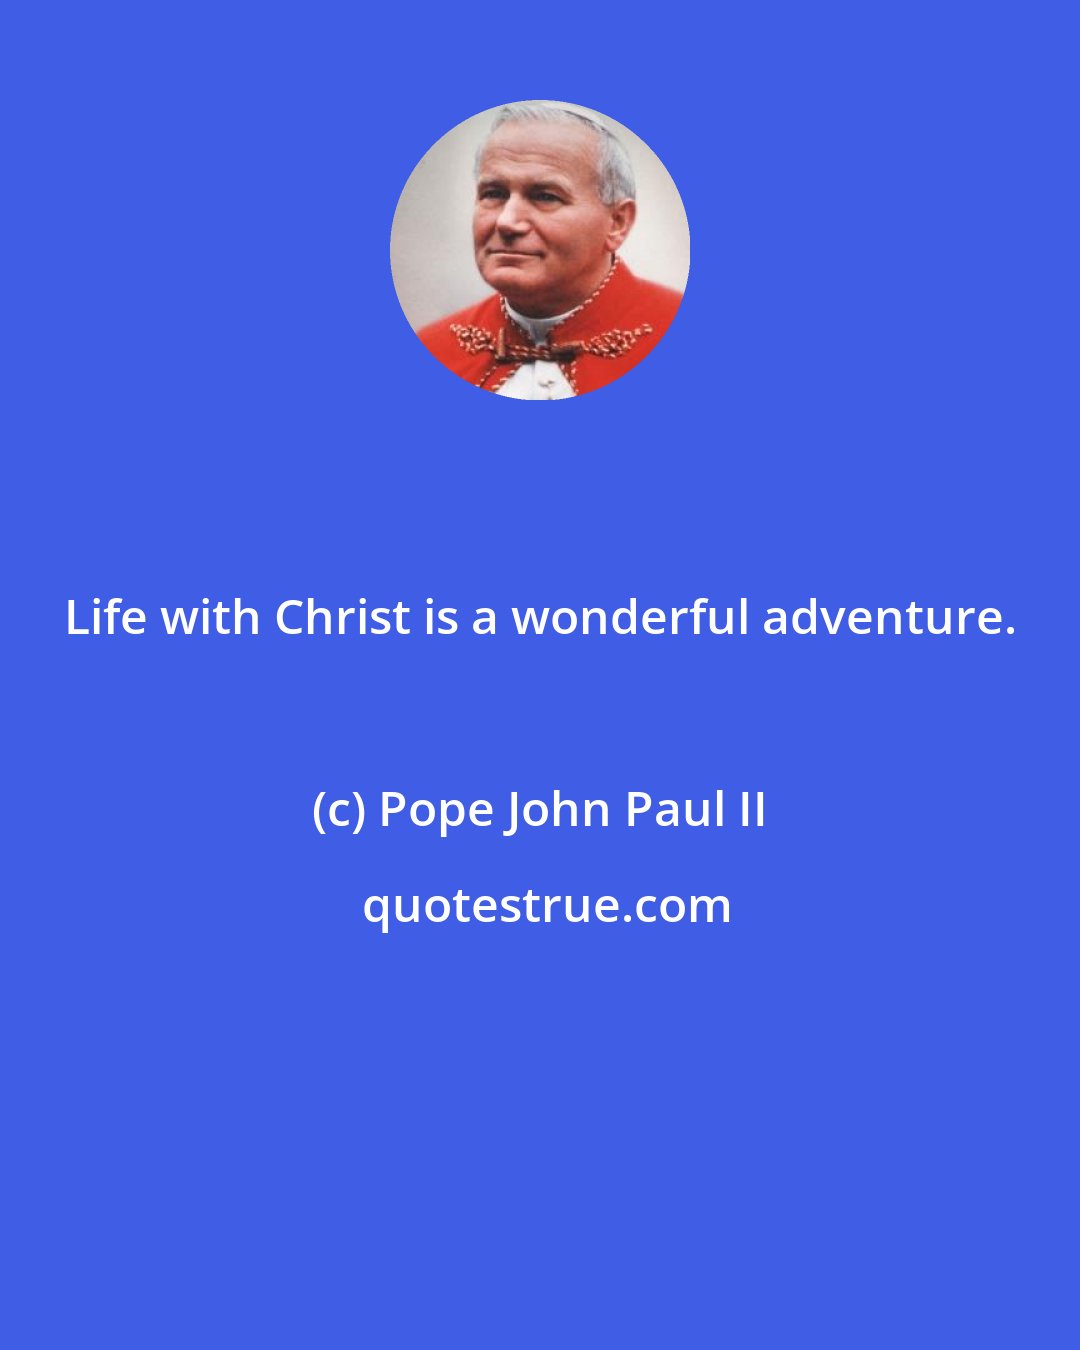 Pope John Paul II: Life with Christ is a wonderful adventure.